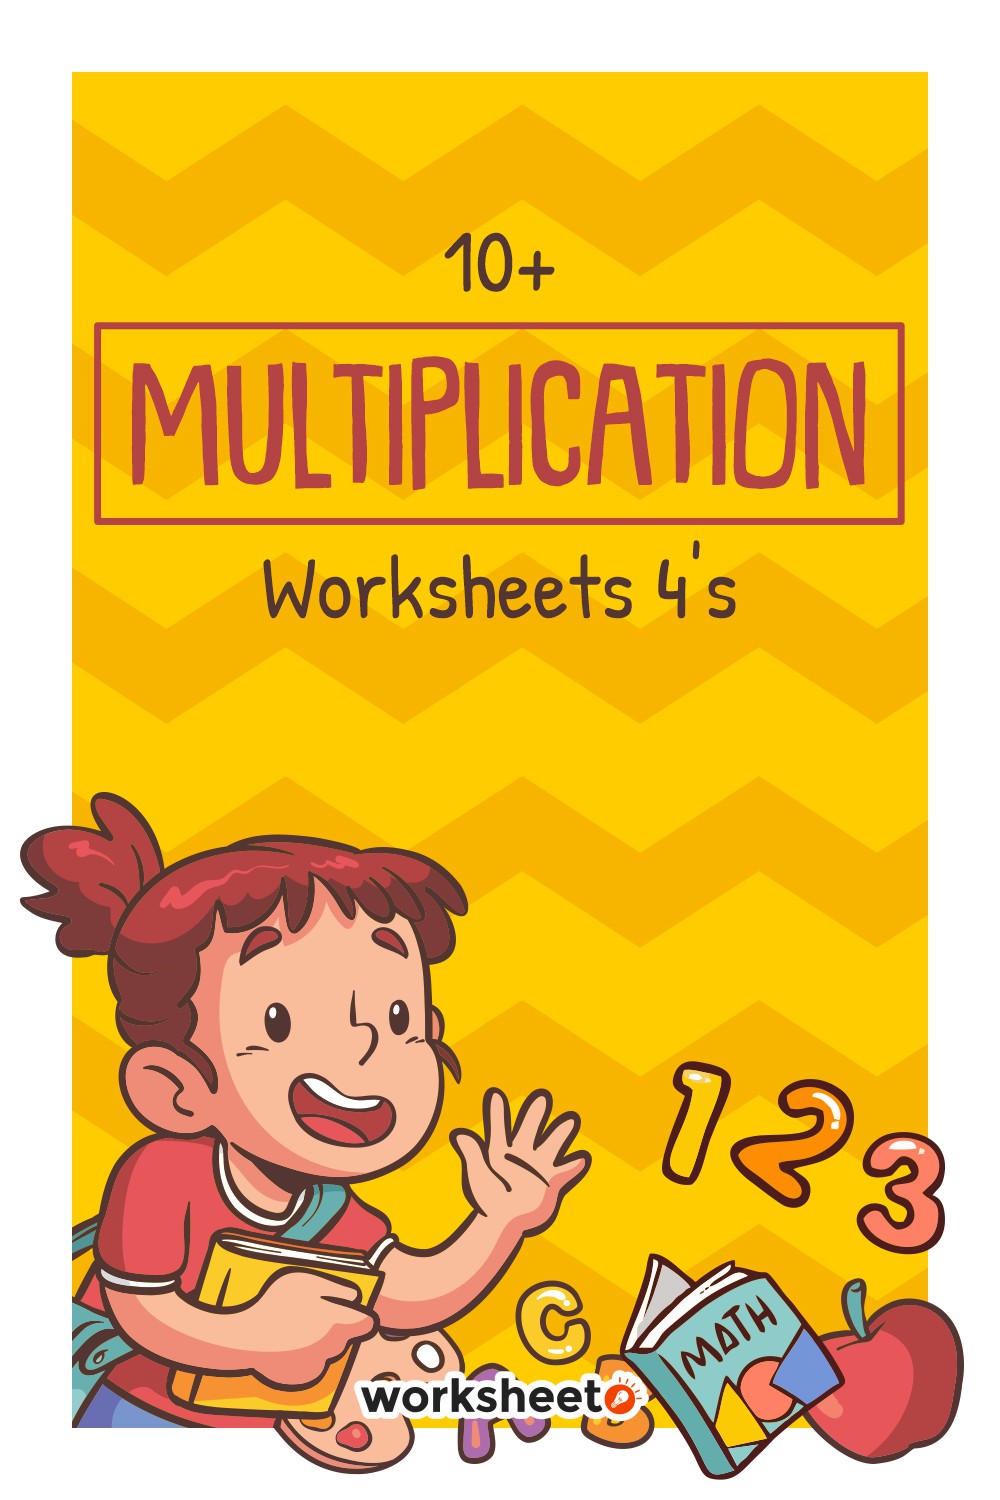 11 Multiplication Worksheets 4S Free PDF At Worksheeto